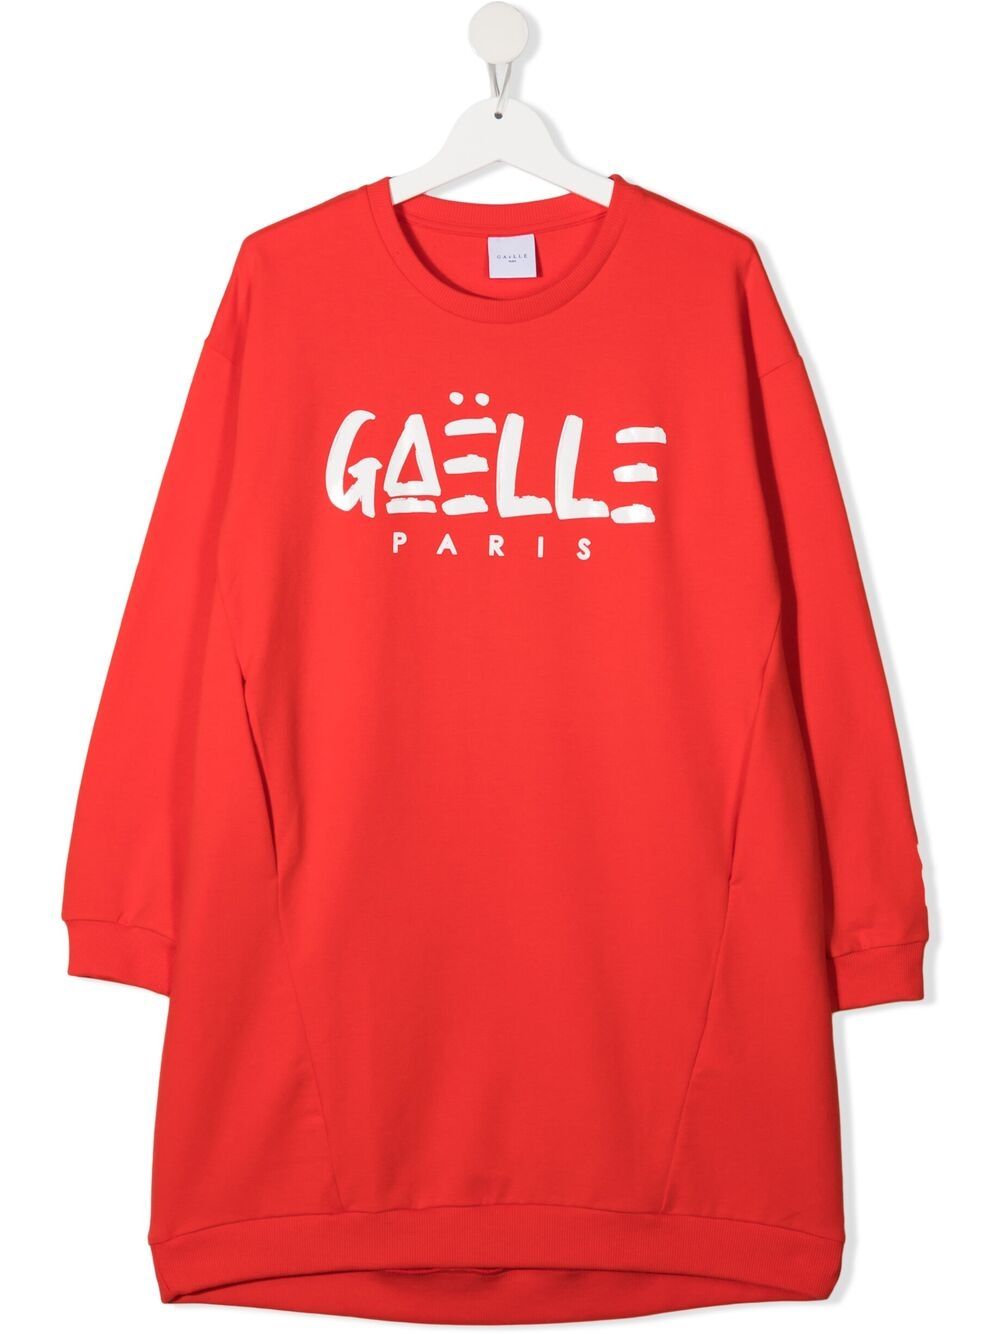 GAELLE PARIS TEEN LOGO-PRINT SWEATSHIRT DRESS